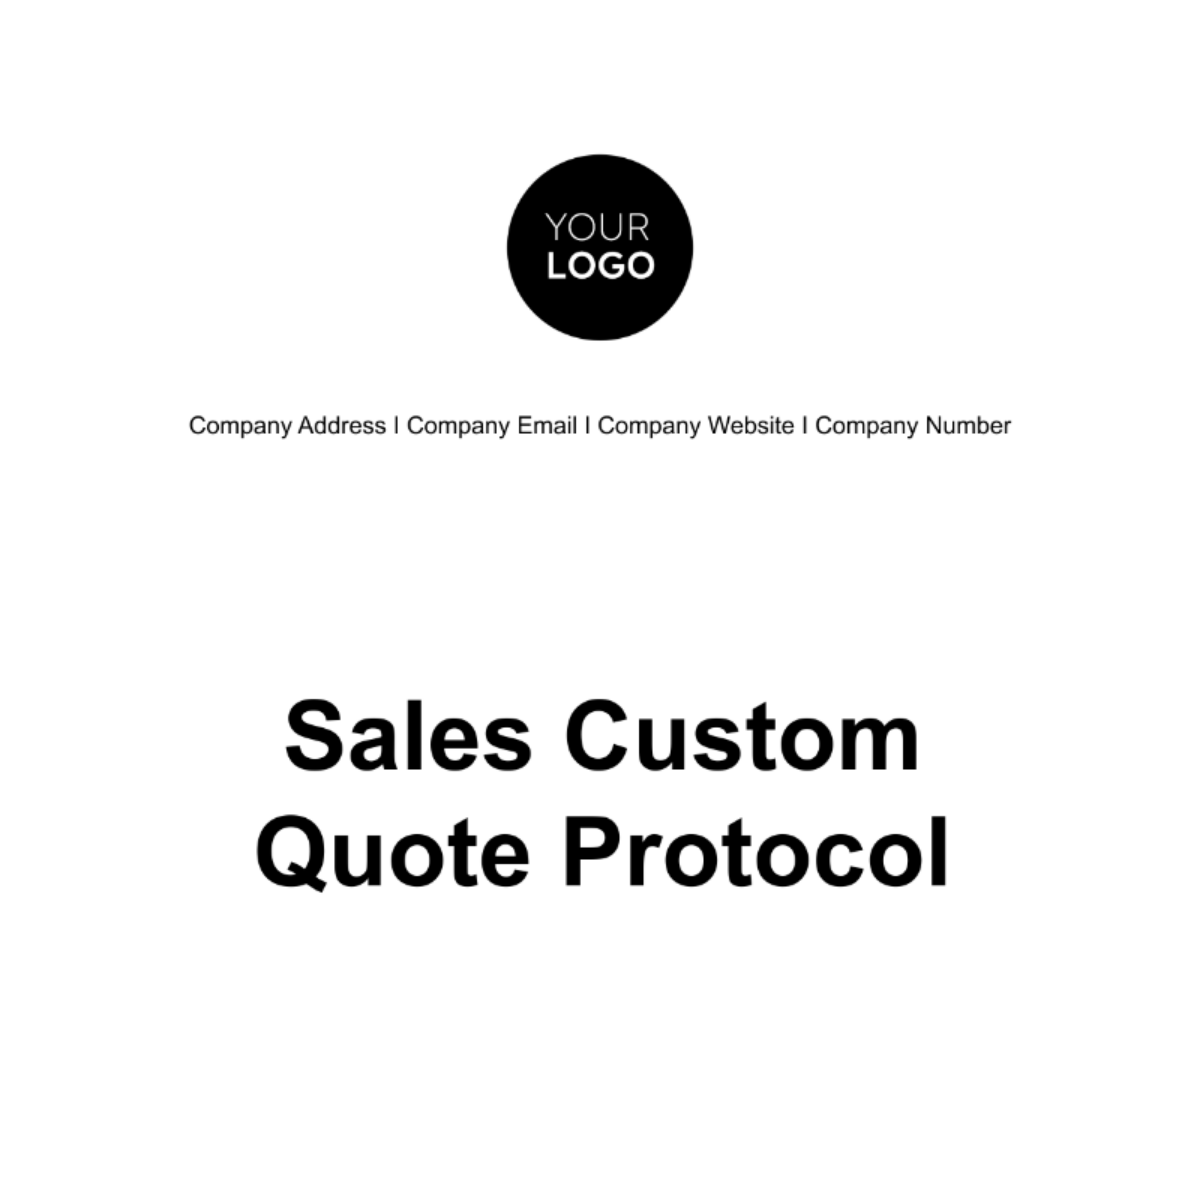 Sales Custom Quote Protocol Template